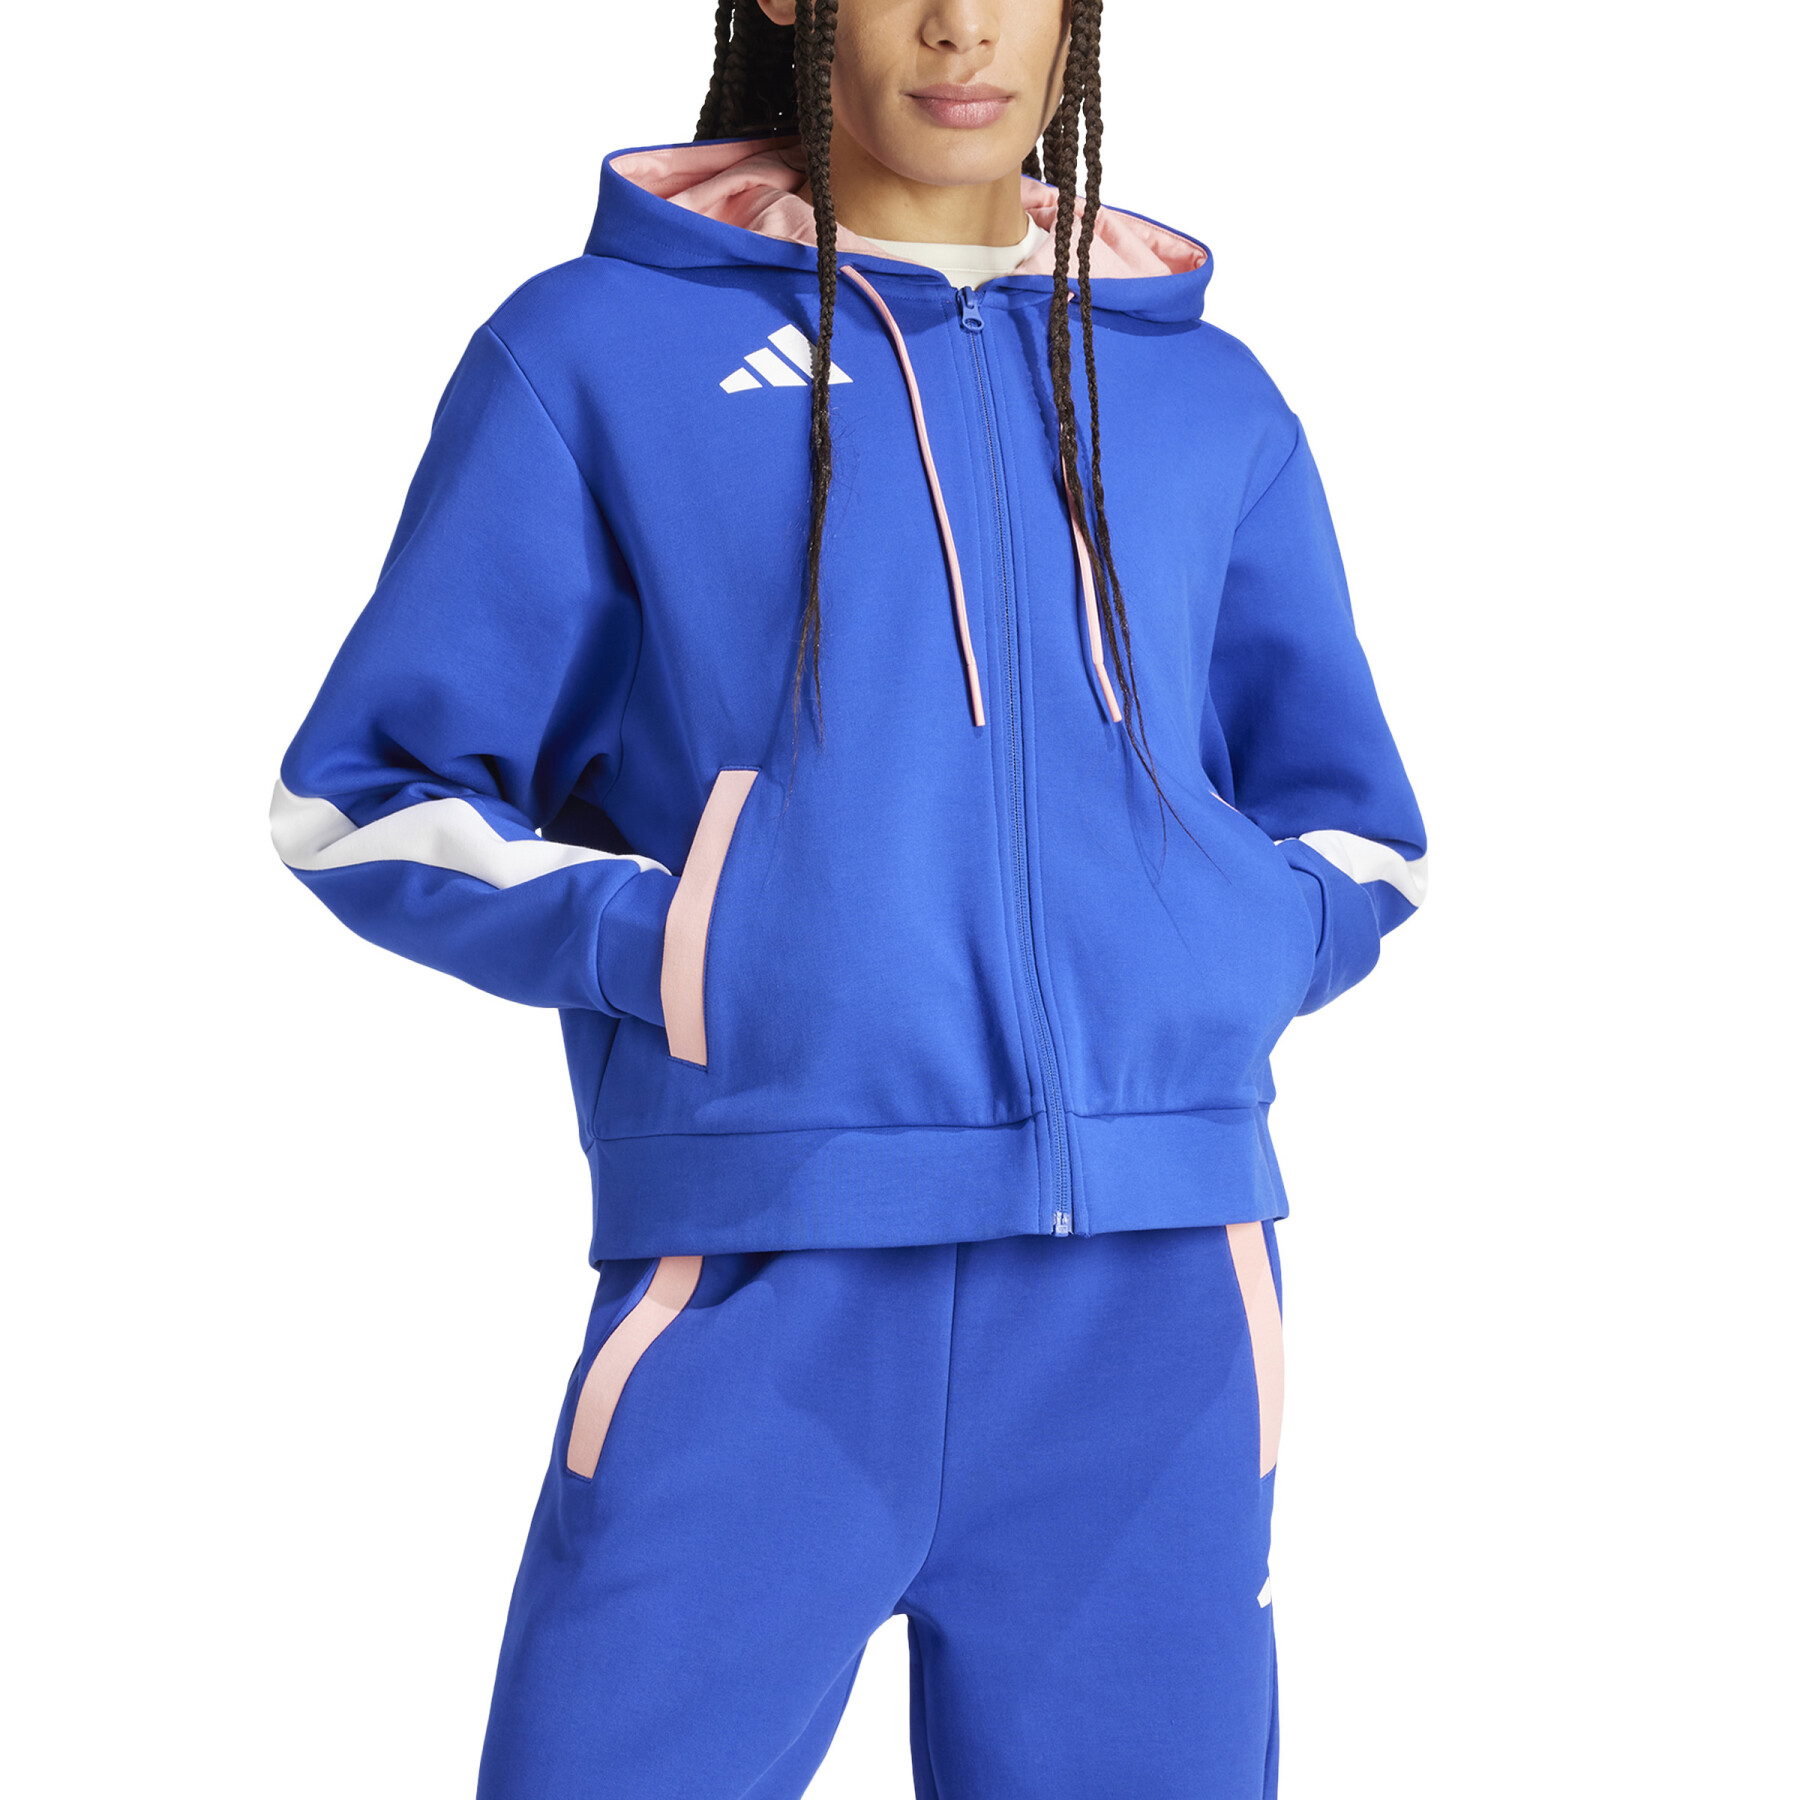 Damen-Trainingsjacke mit Kapuze adidas Team France